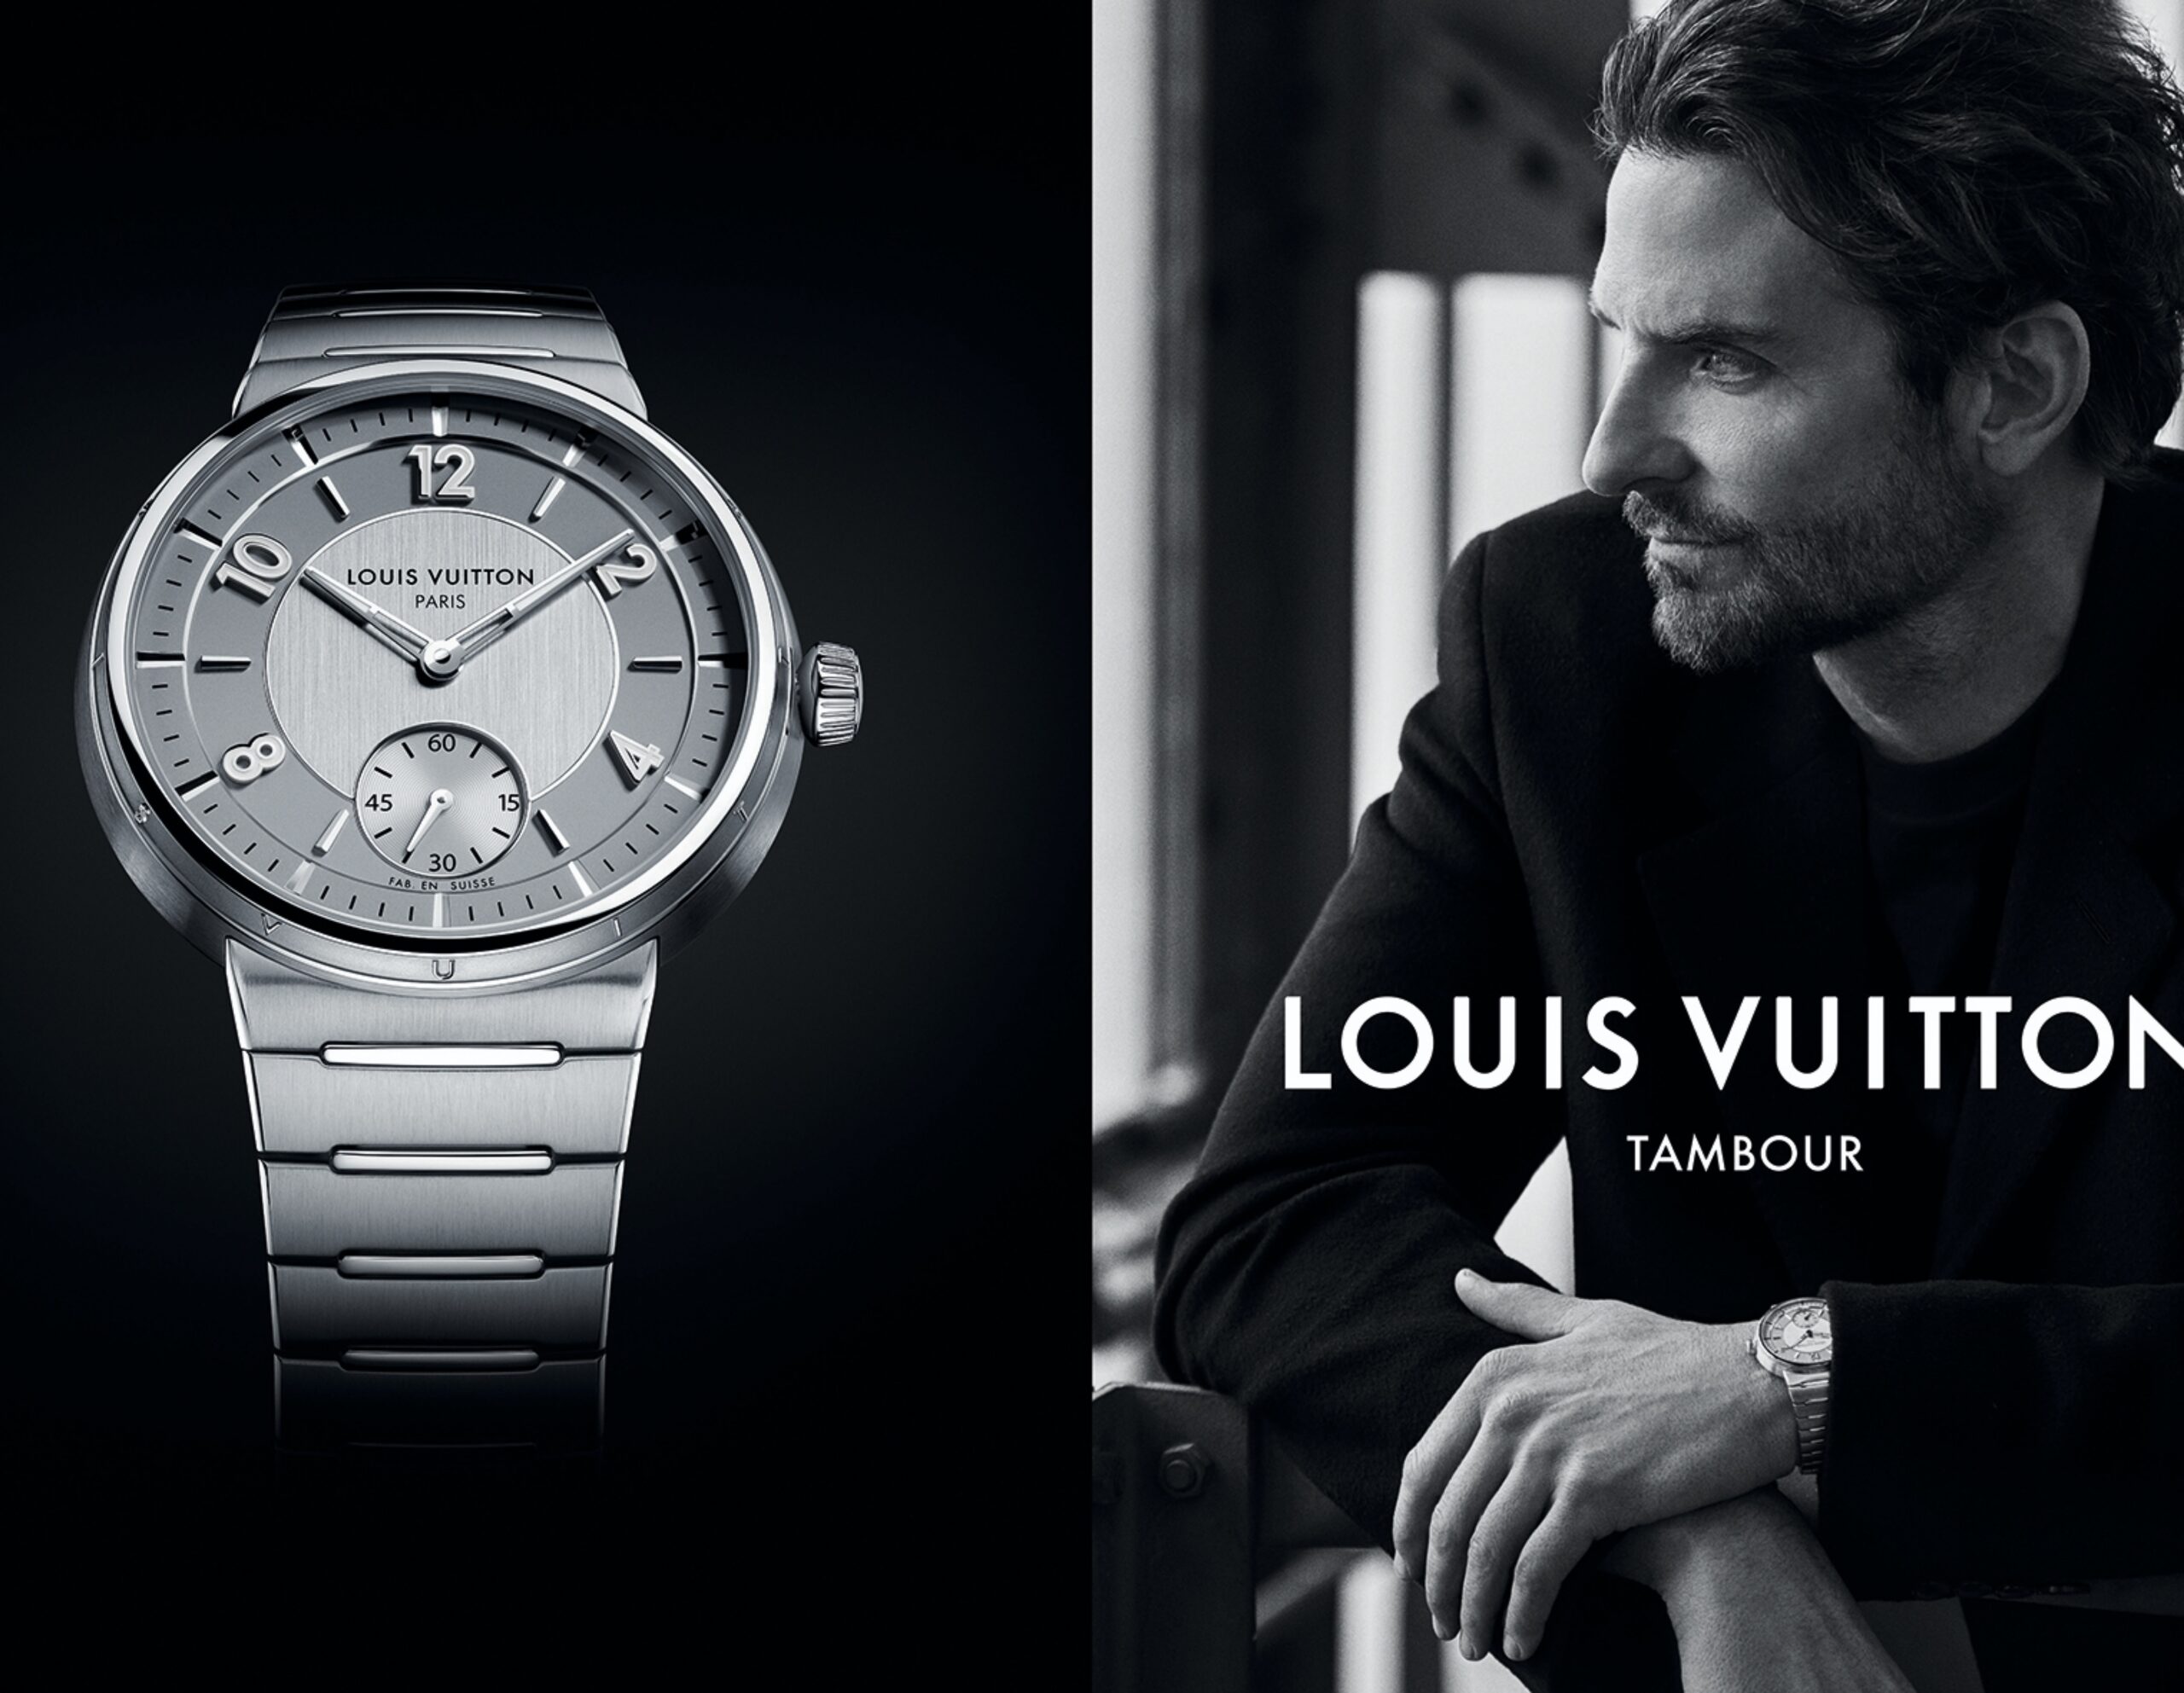 Bradley Cooper protagoniza campaña de Louis Vuitton